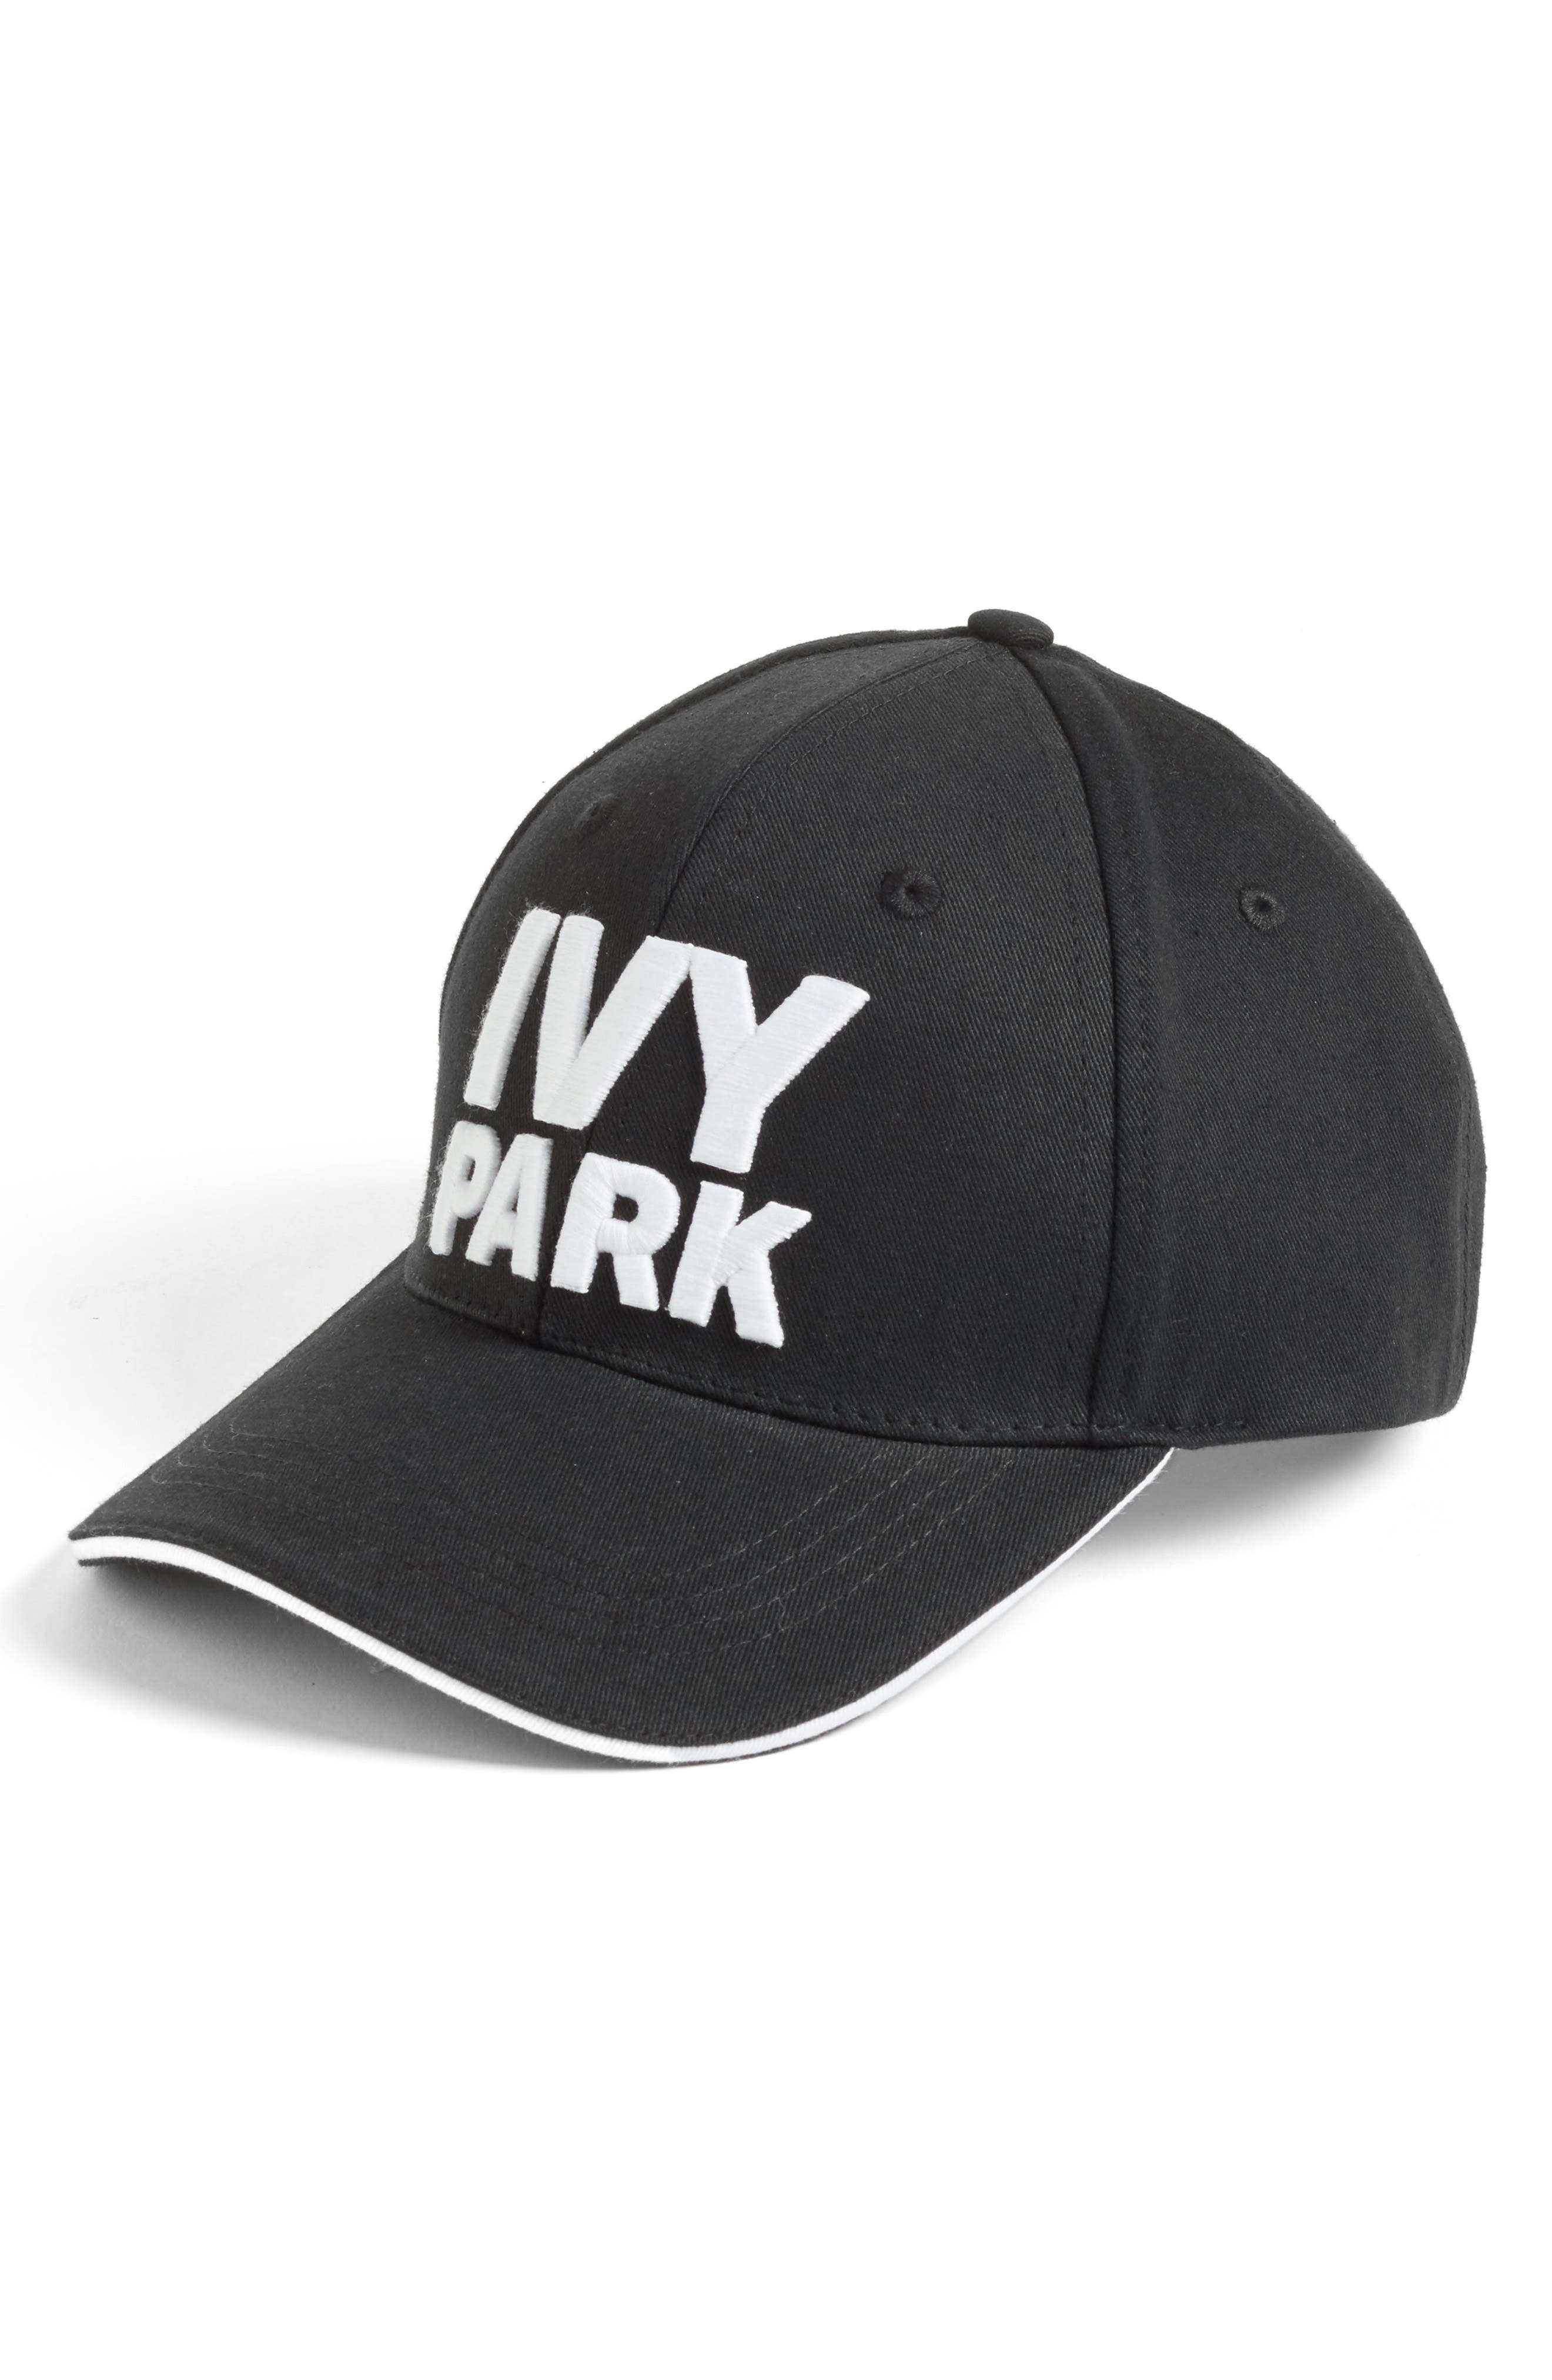 ivy park hats